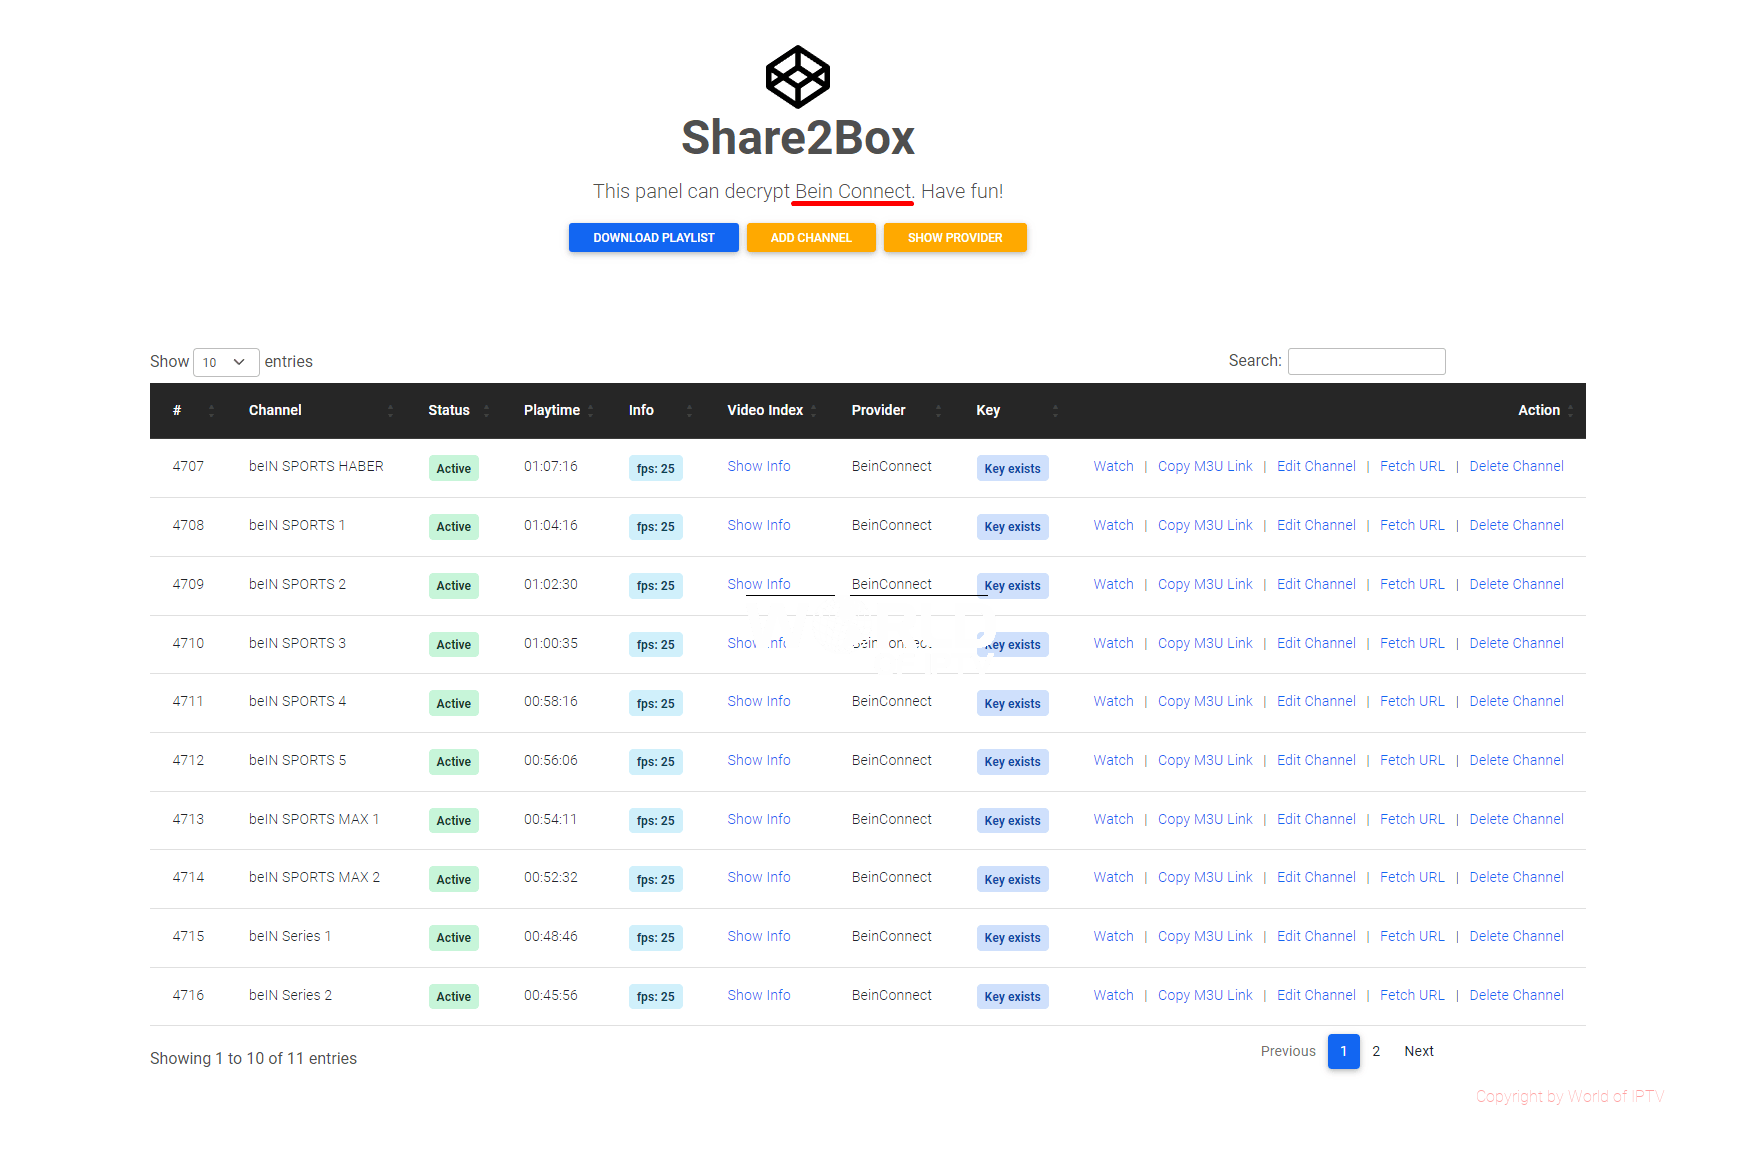 Share2Box DRM Panel